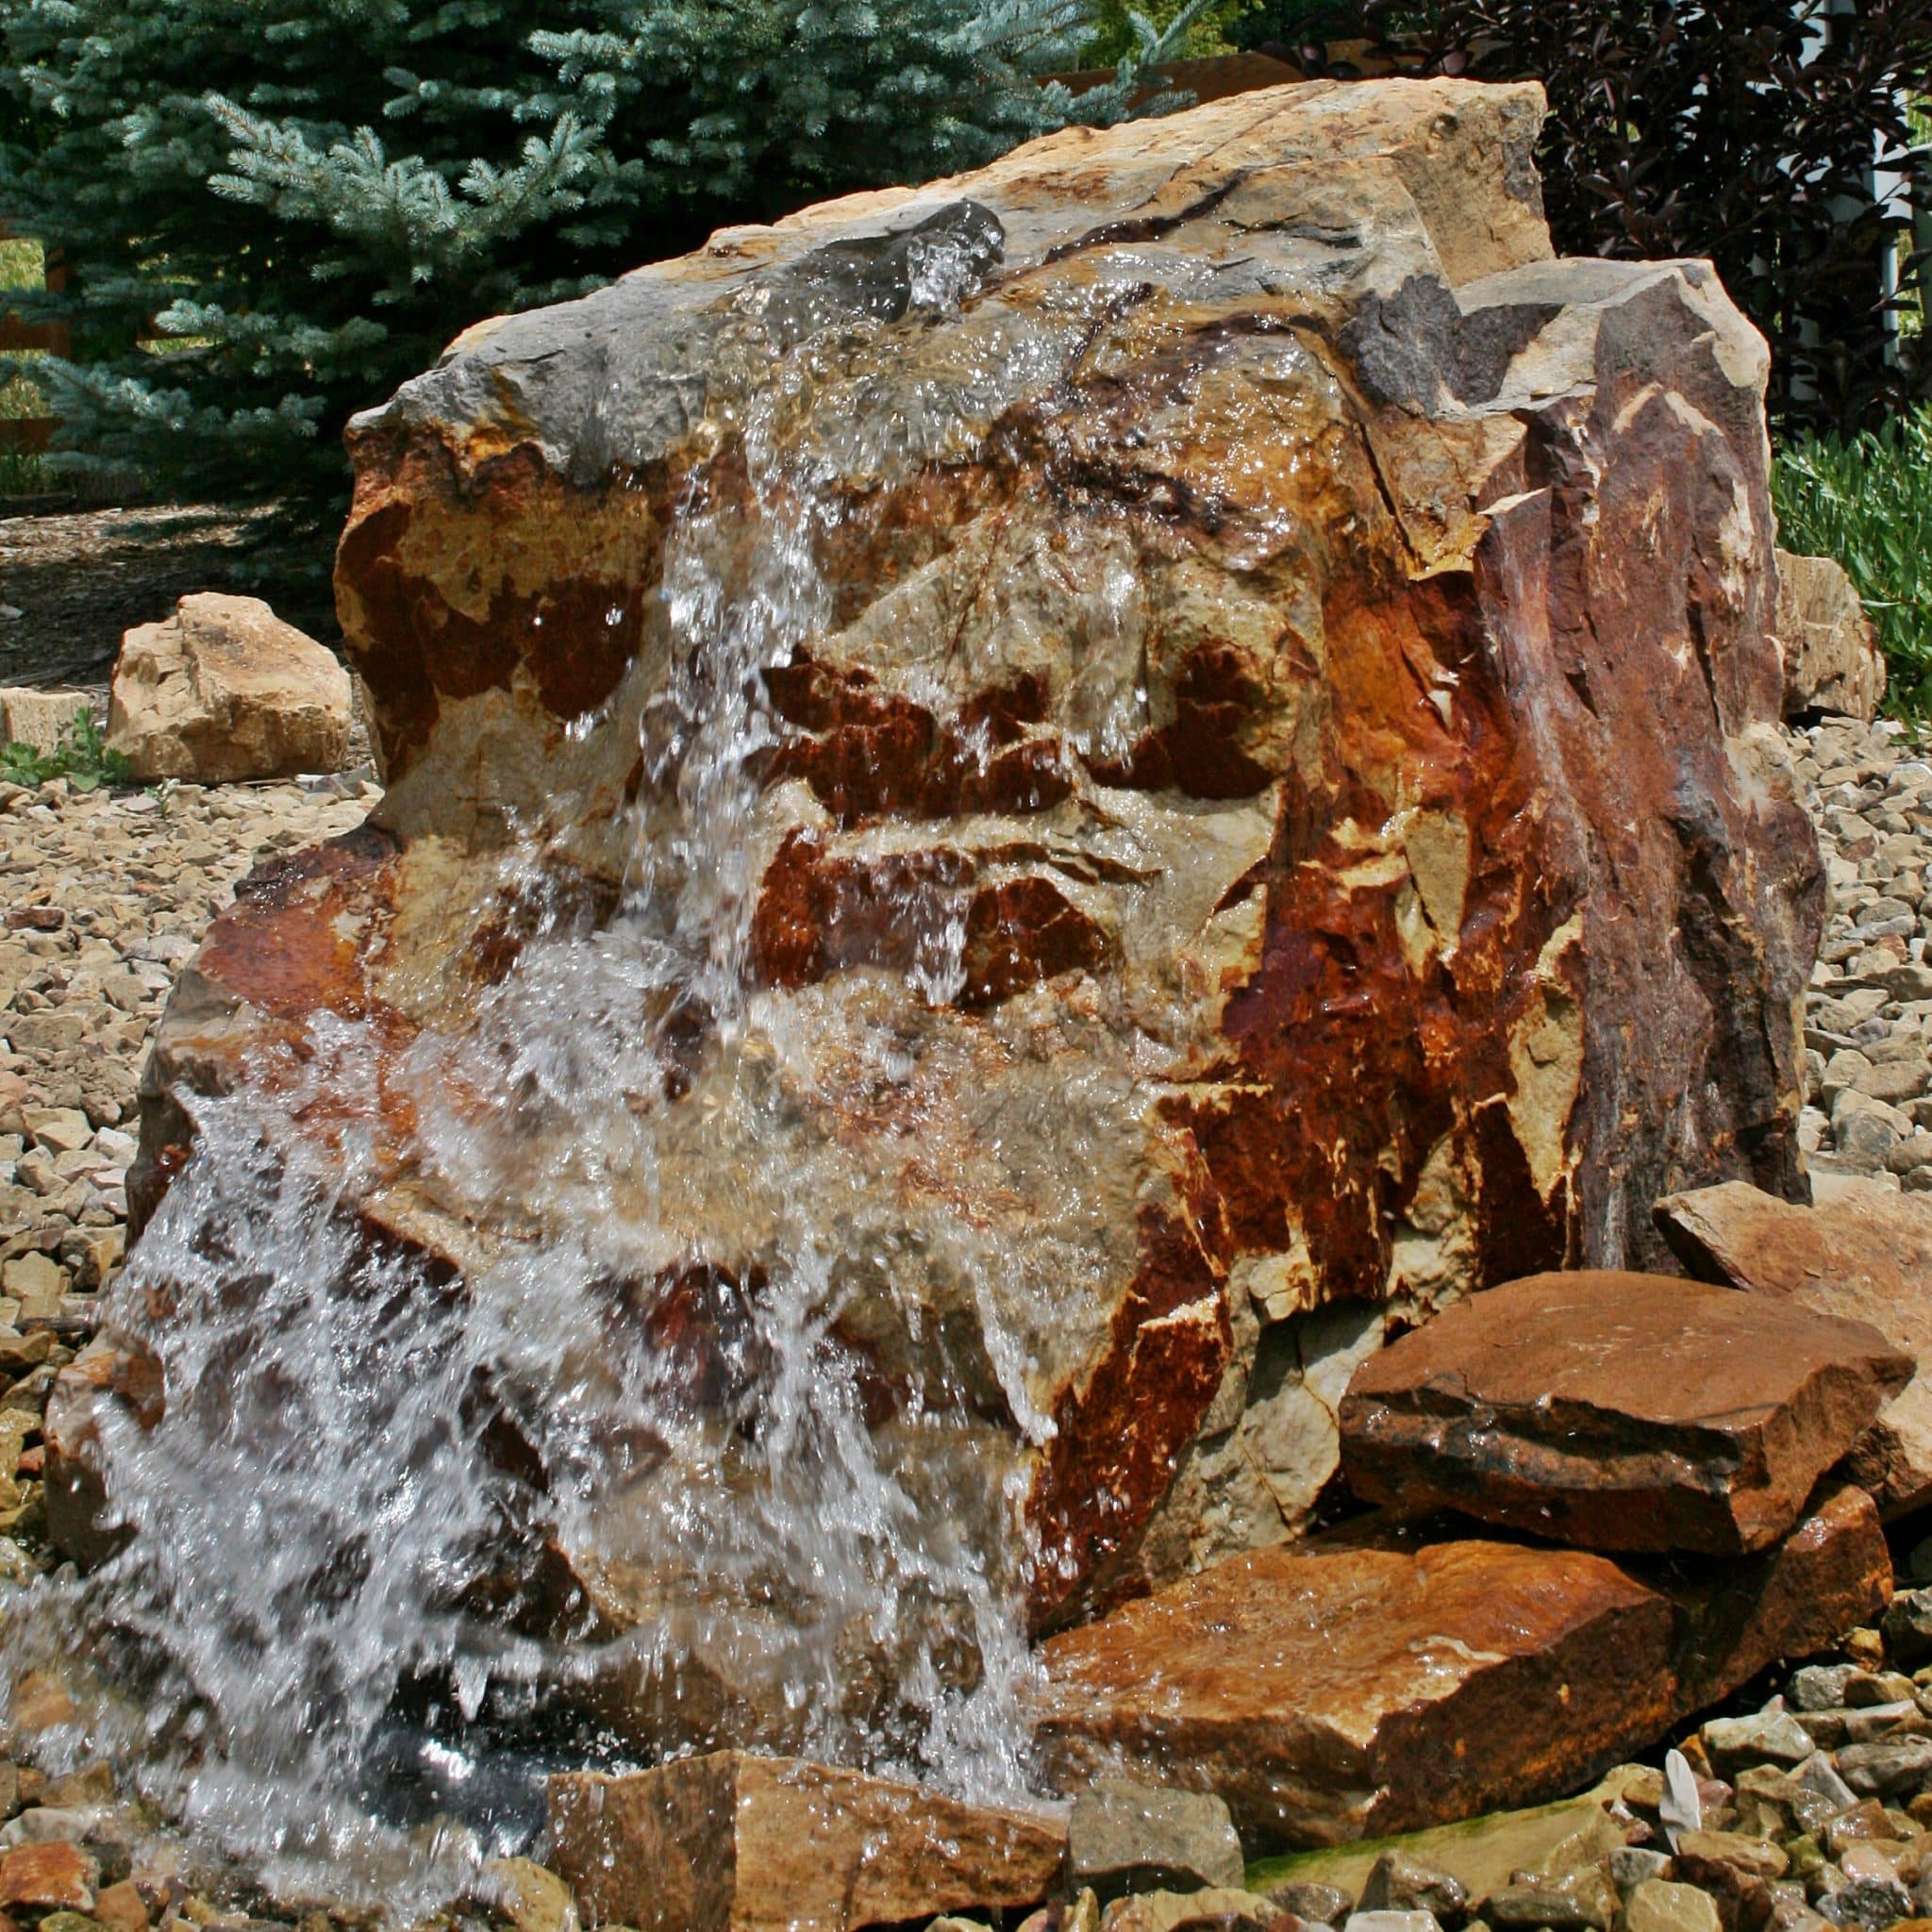 CHEROKEE FOUNTAIN - Water Features - Rock Garden